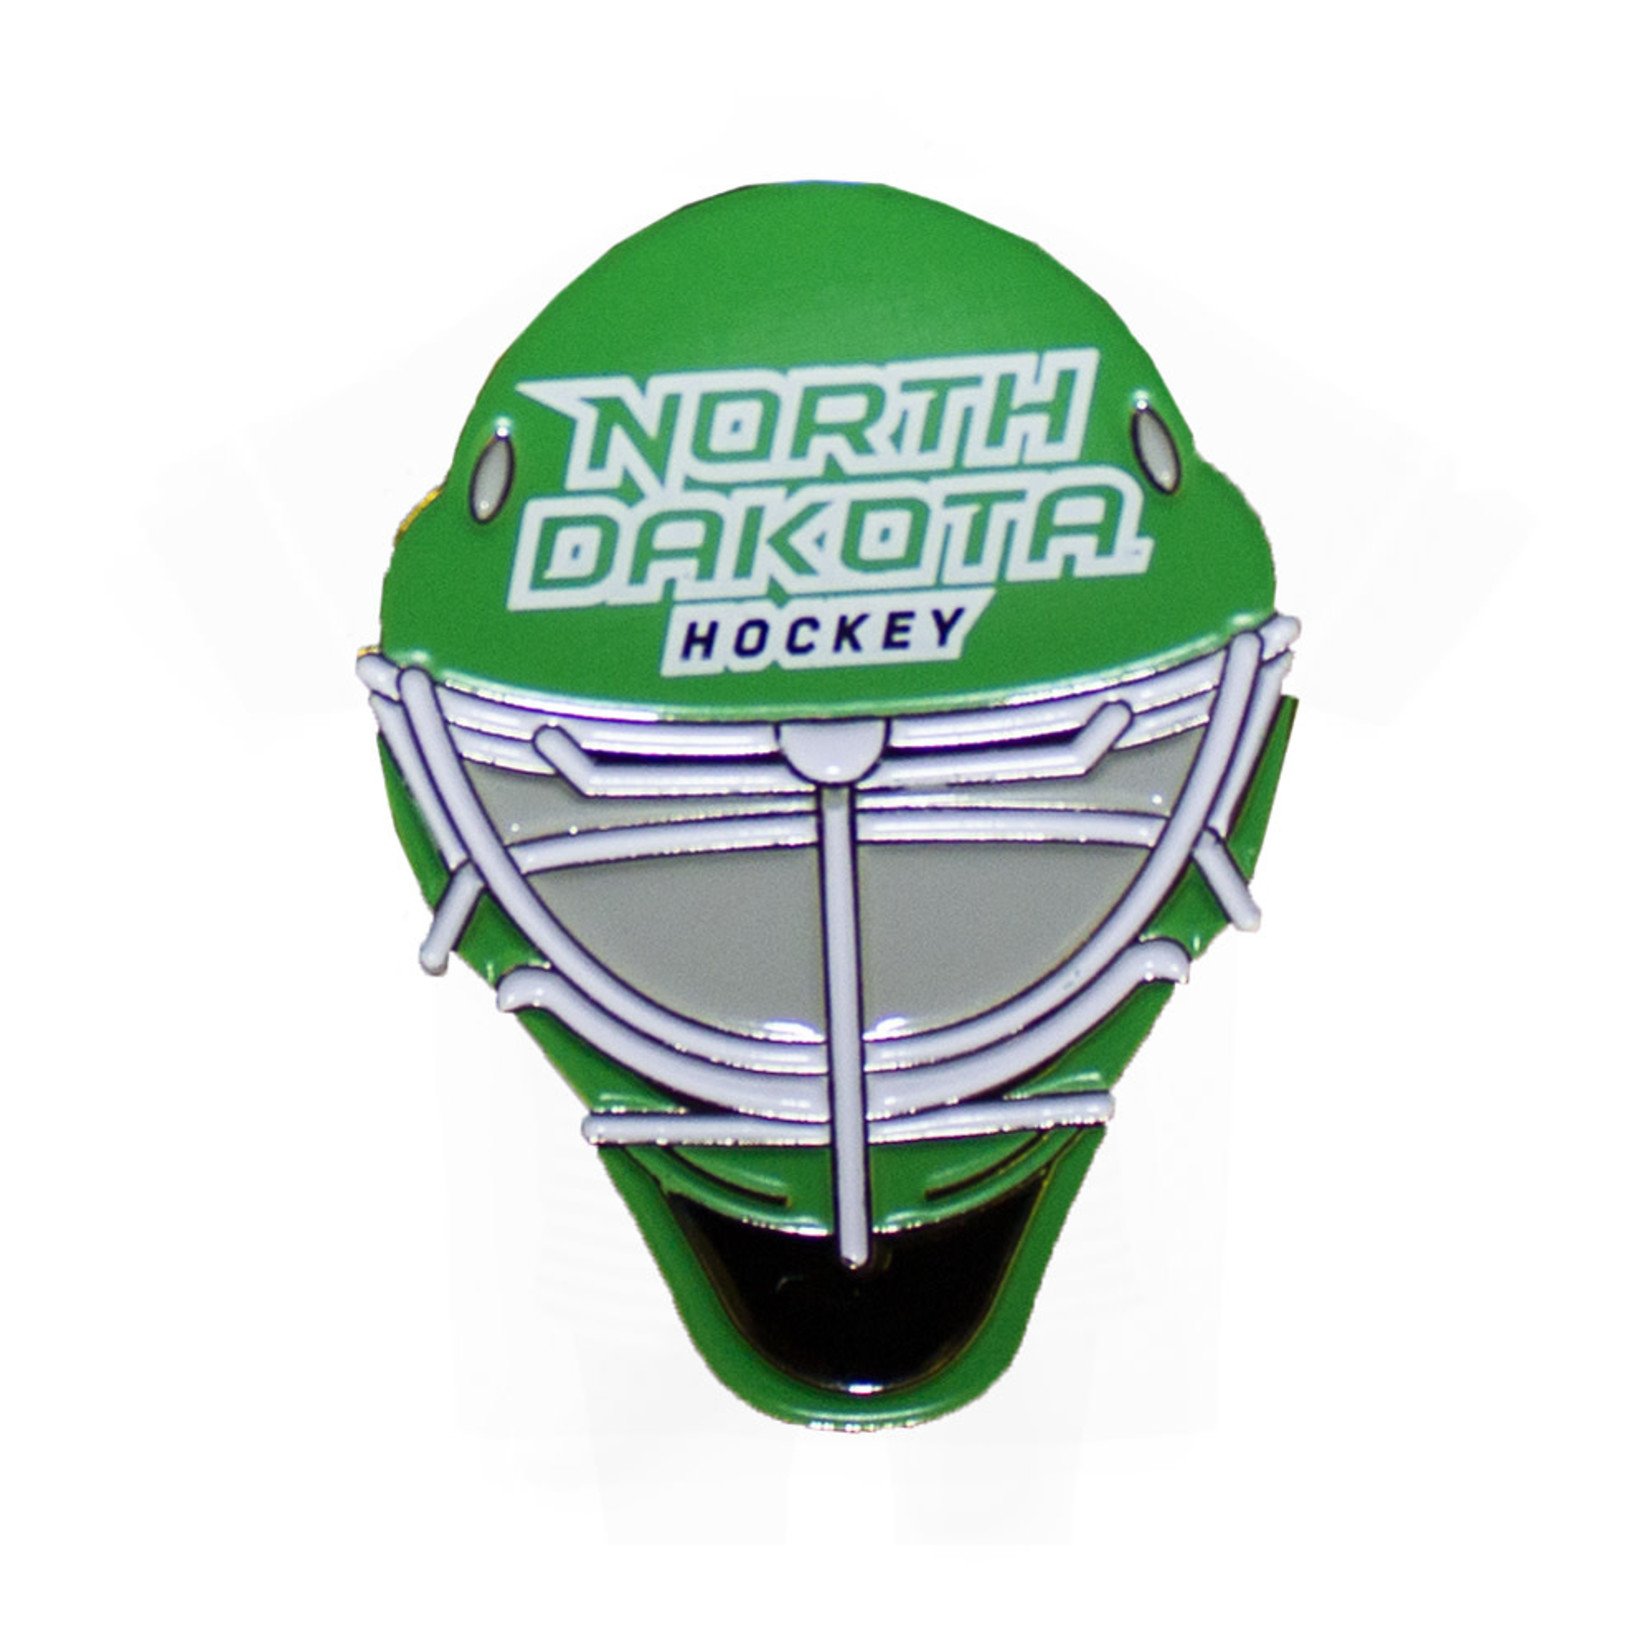 North Dakota Hockey Goalie Mask Pin